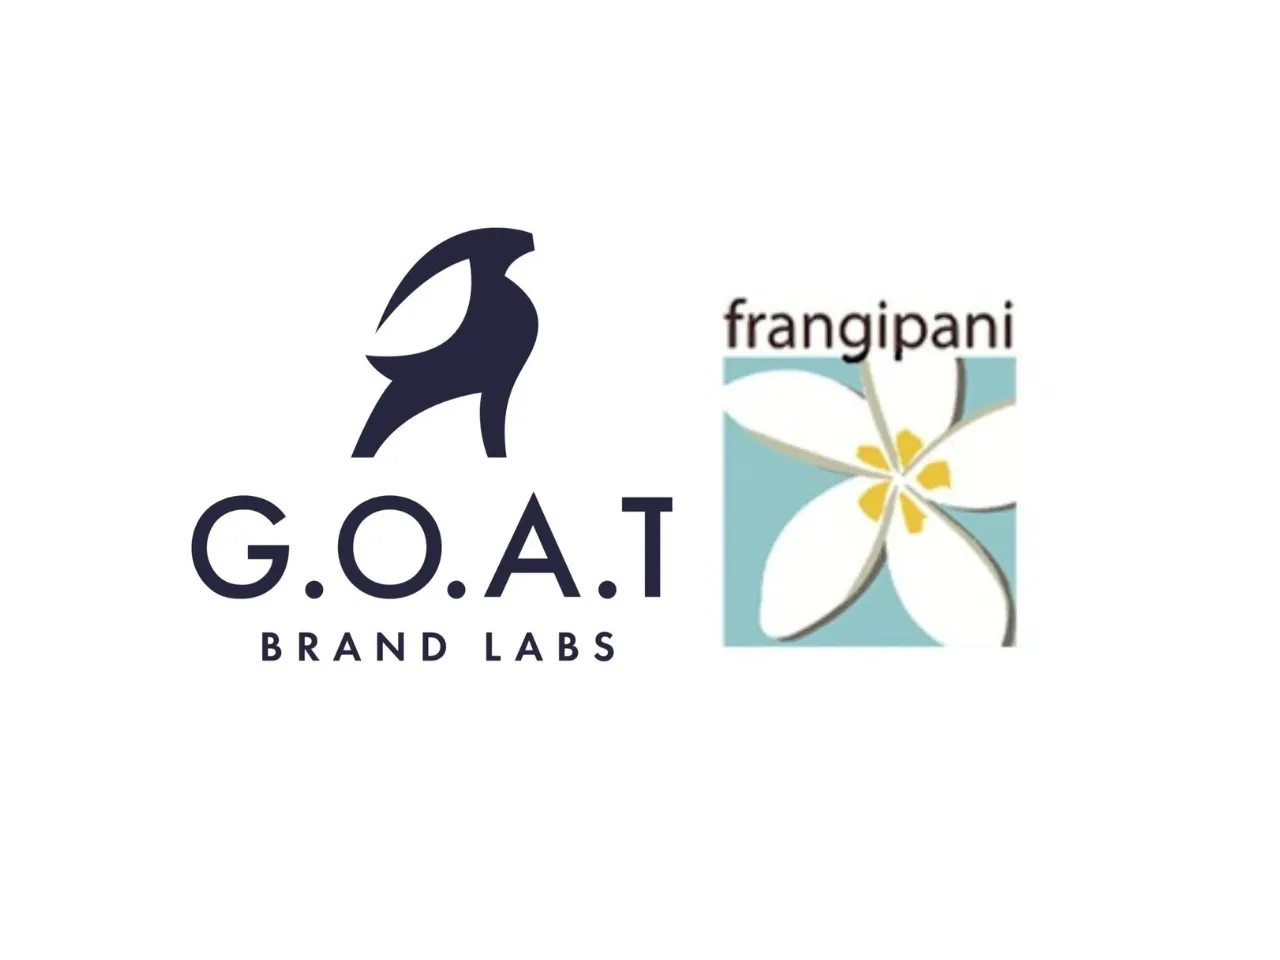  GOAT Brand Labs acquires Frangipani